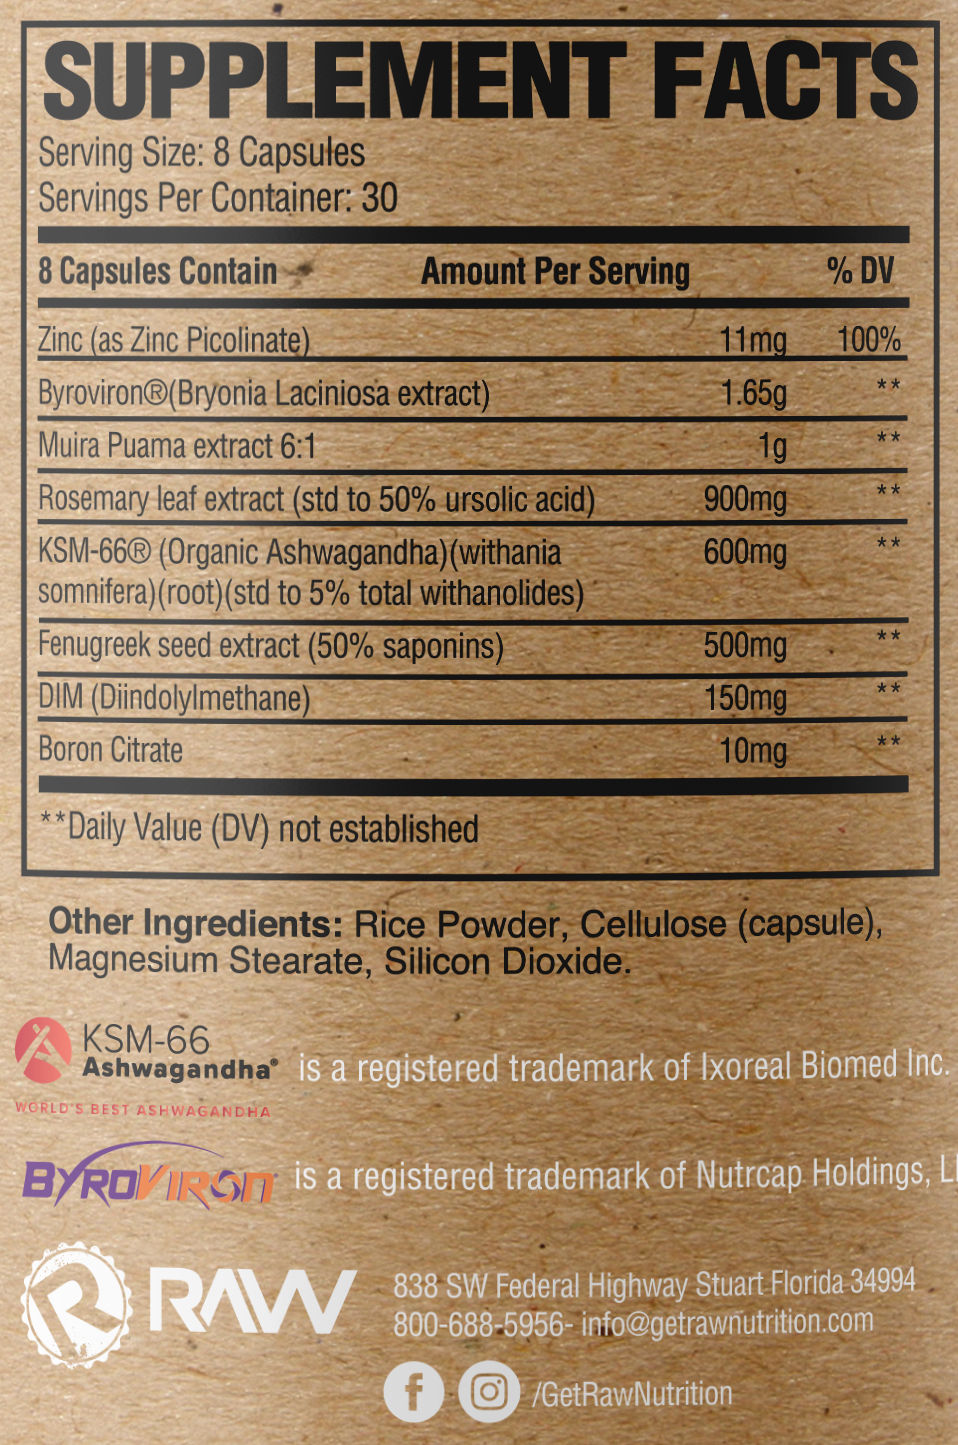 Raw Nutrition Test Ingredients